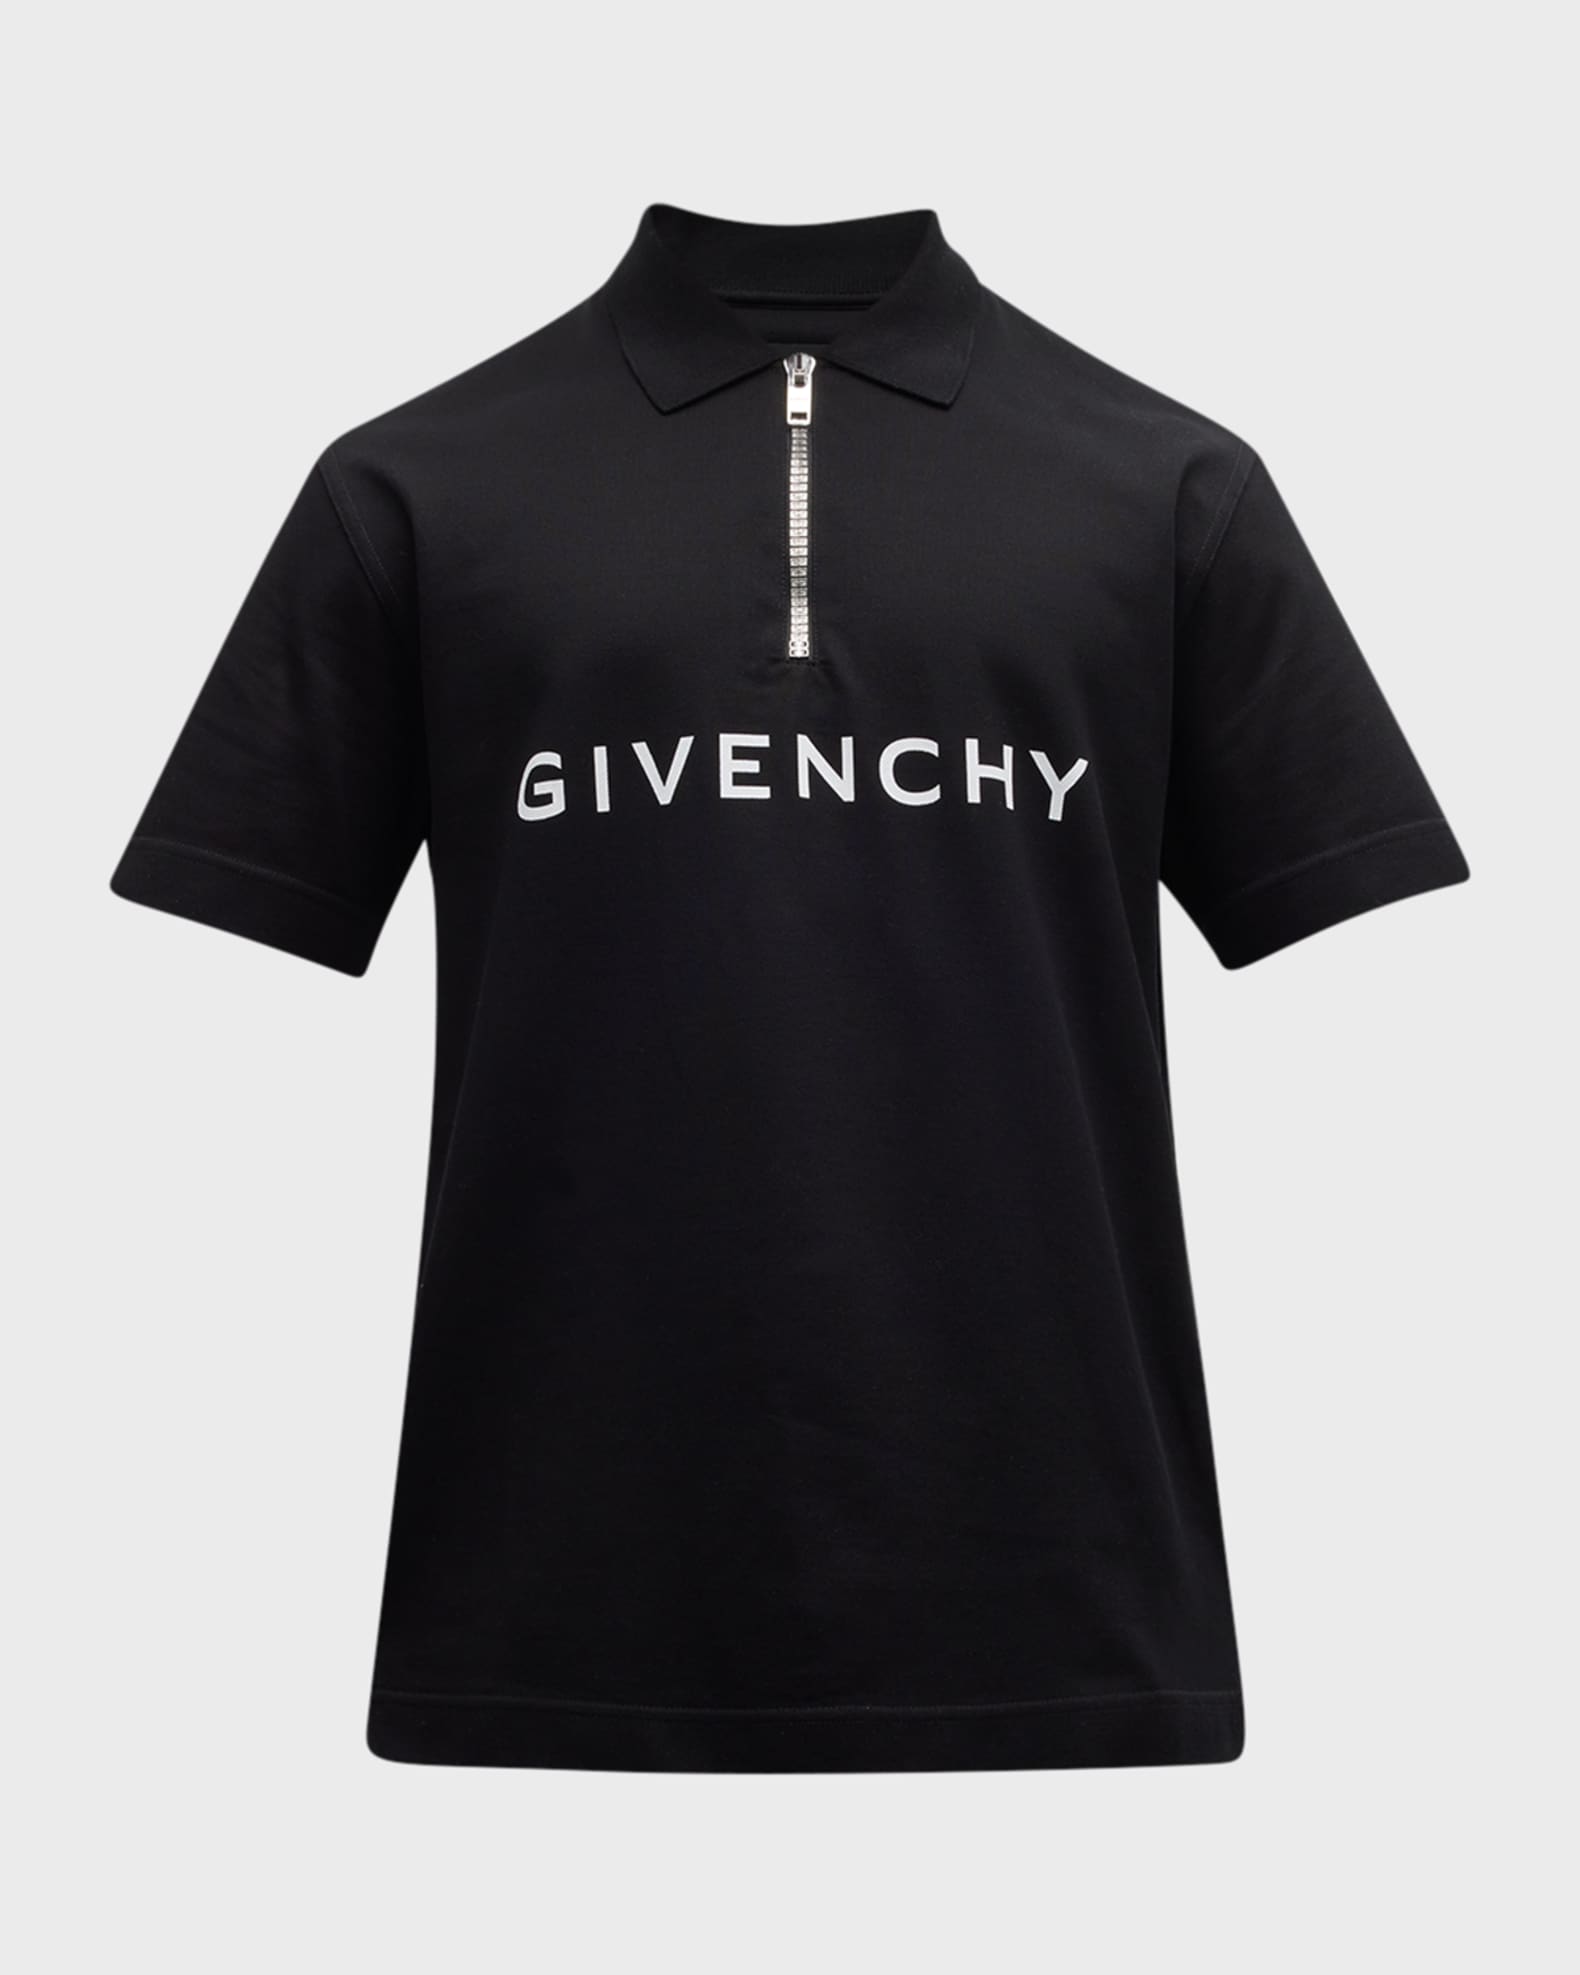 Givenchy Activewear Polo Shirt Golf Gray Cotton Knit Men's L